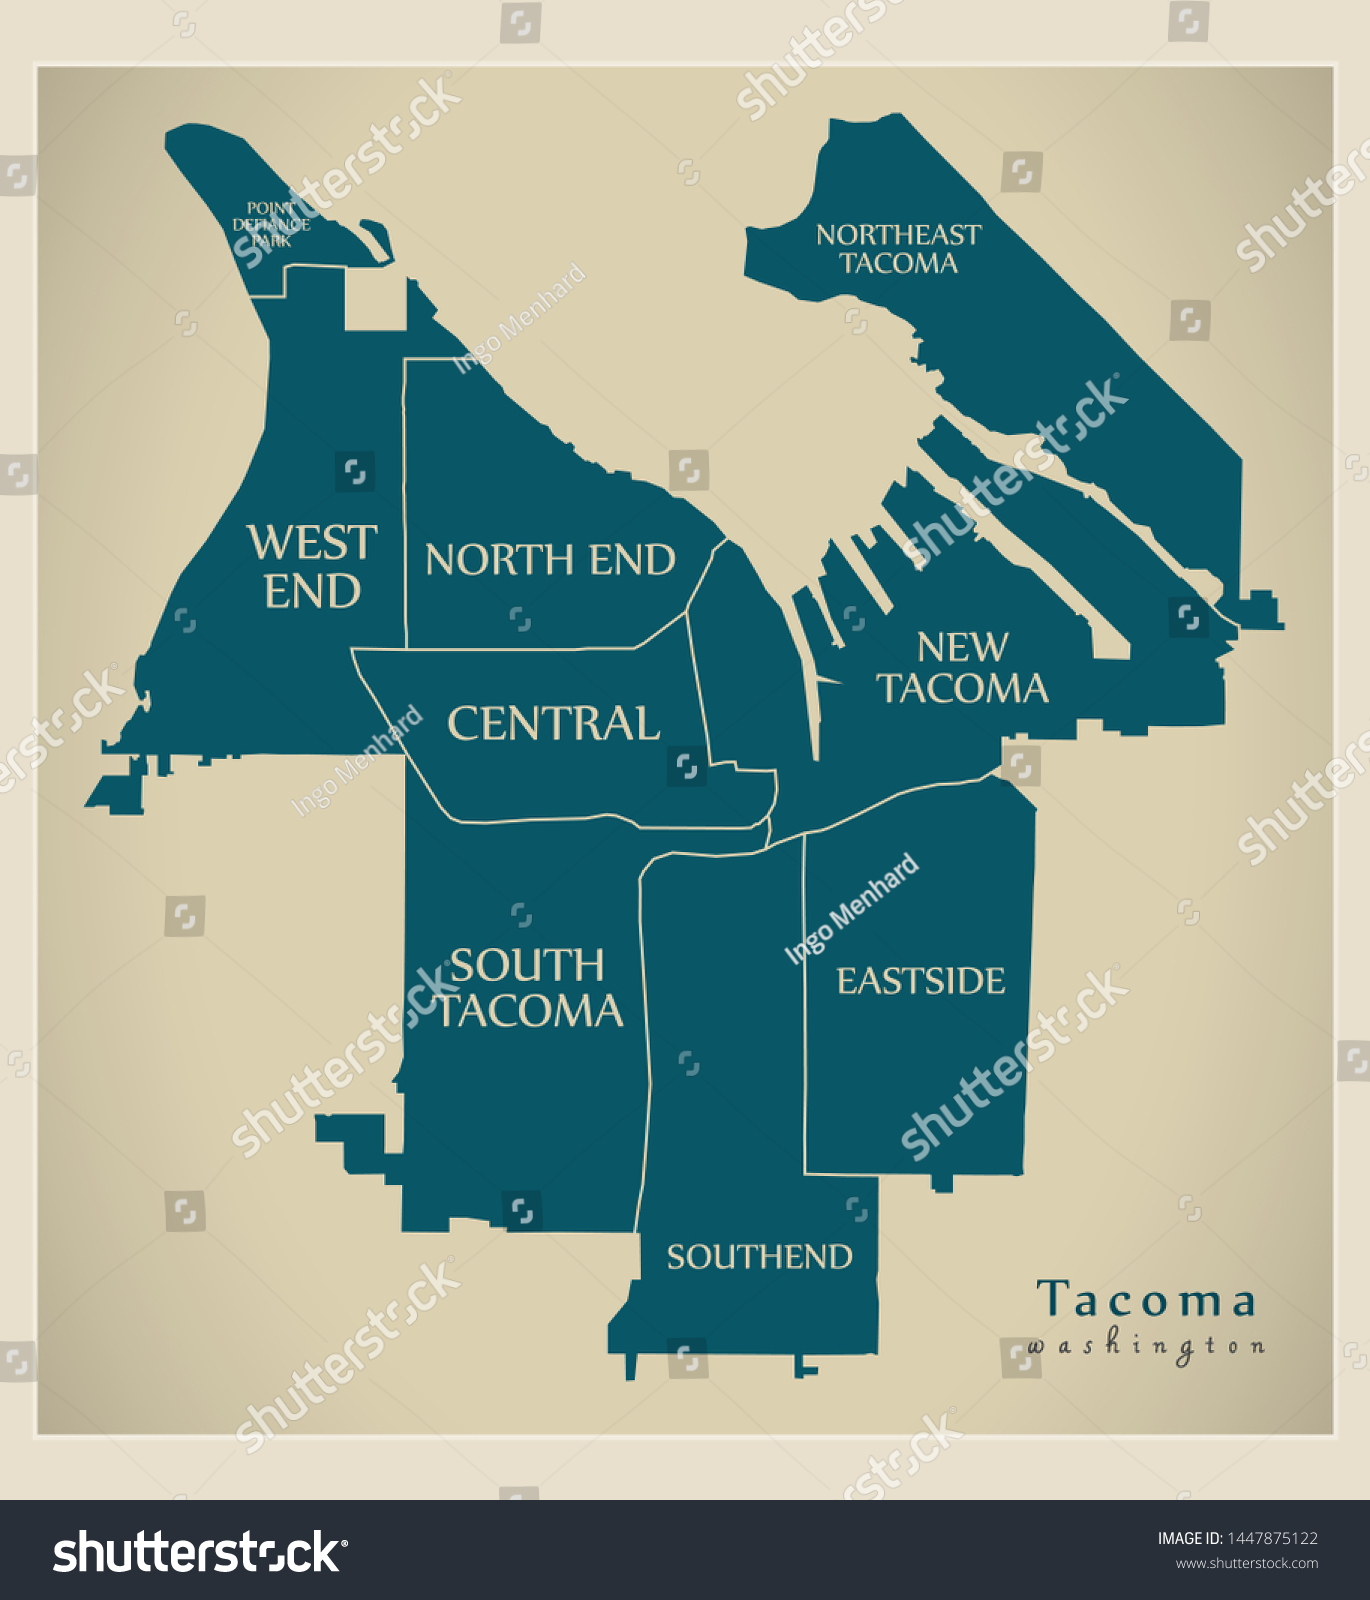 SVG of Modern City Map - Tacoma Washington city of the USA with neighborhoods and titles svg